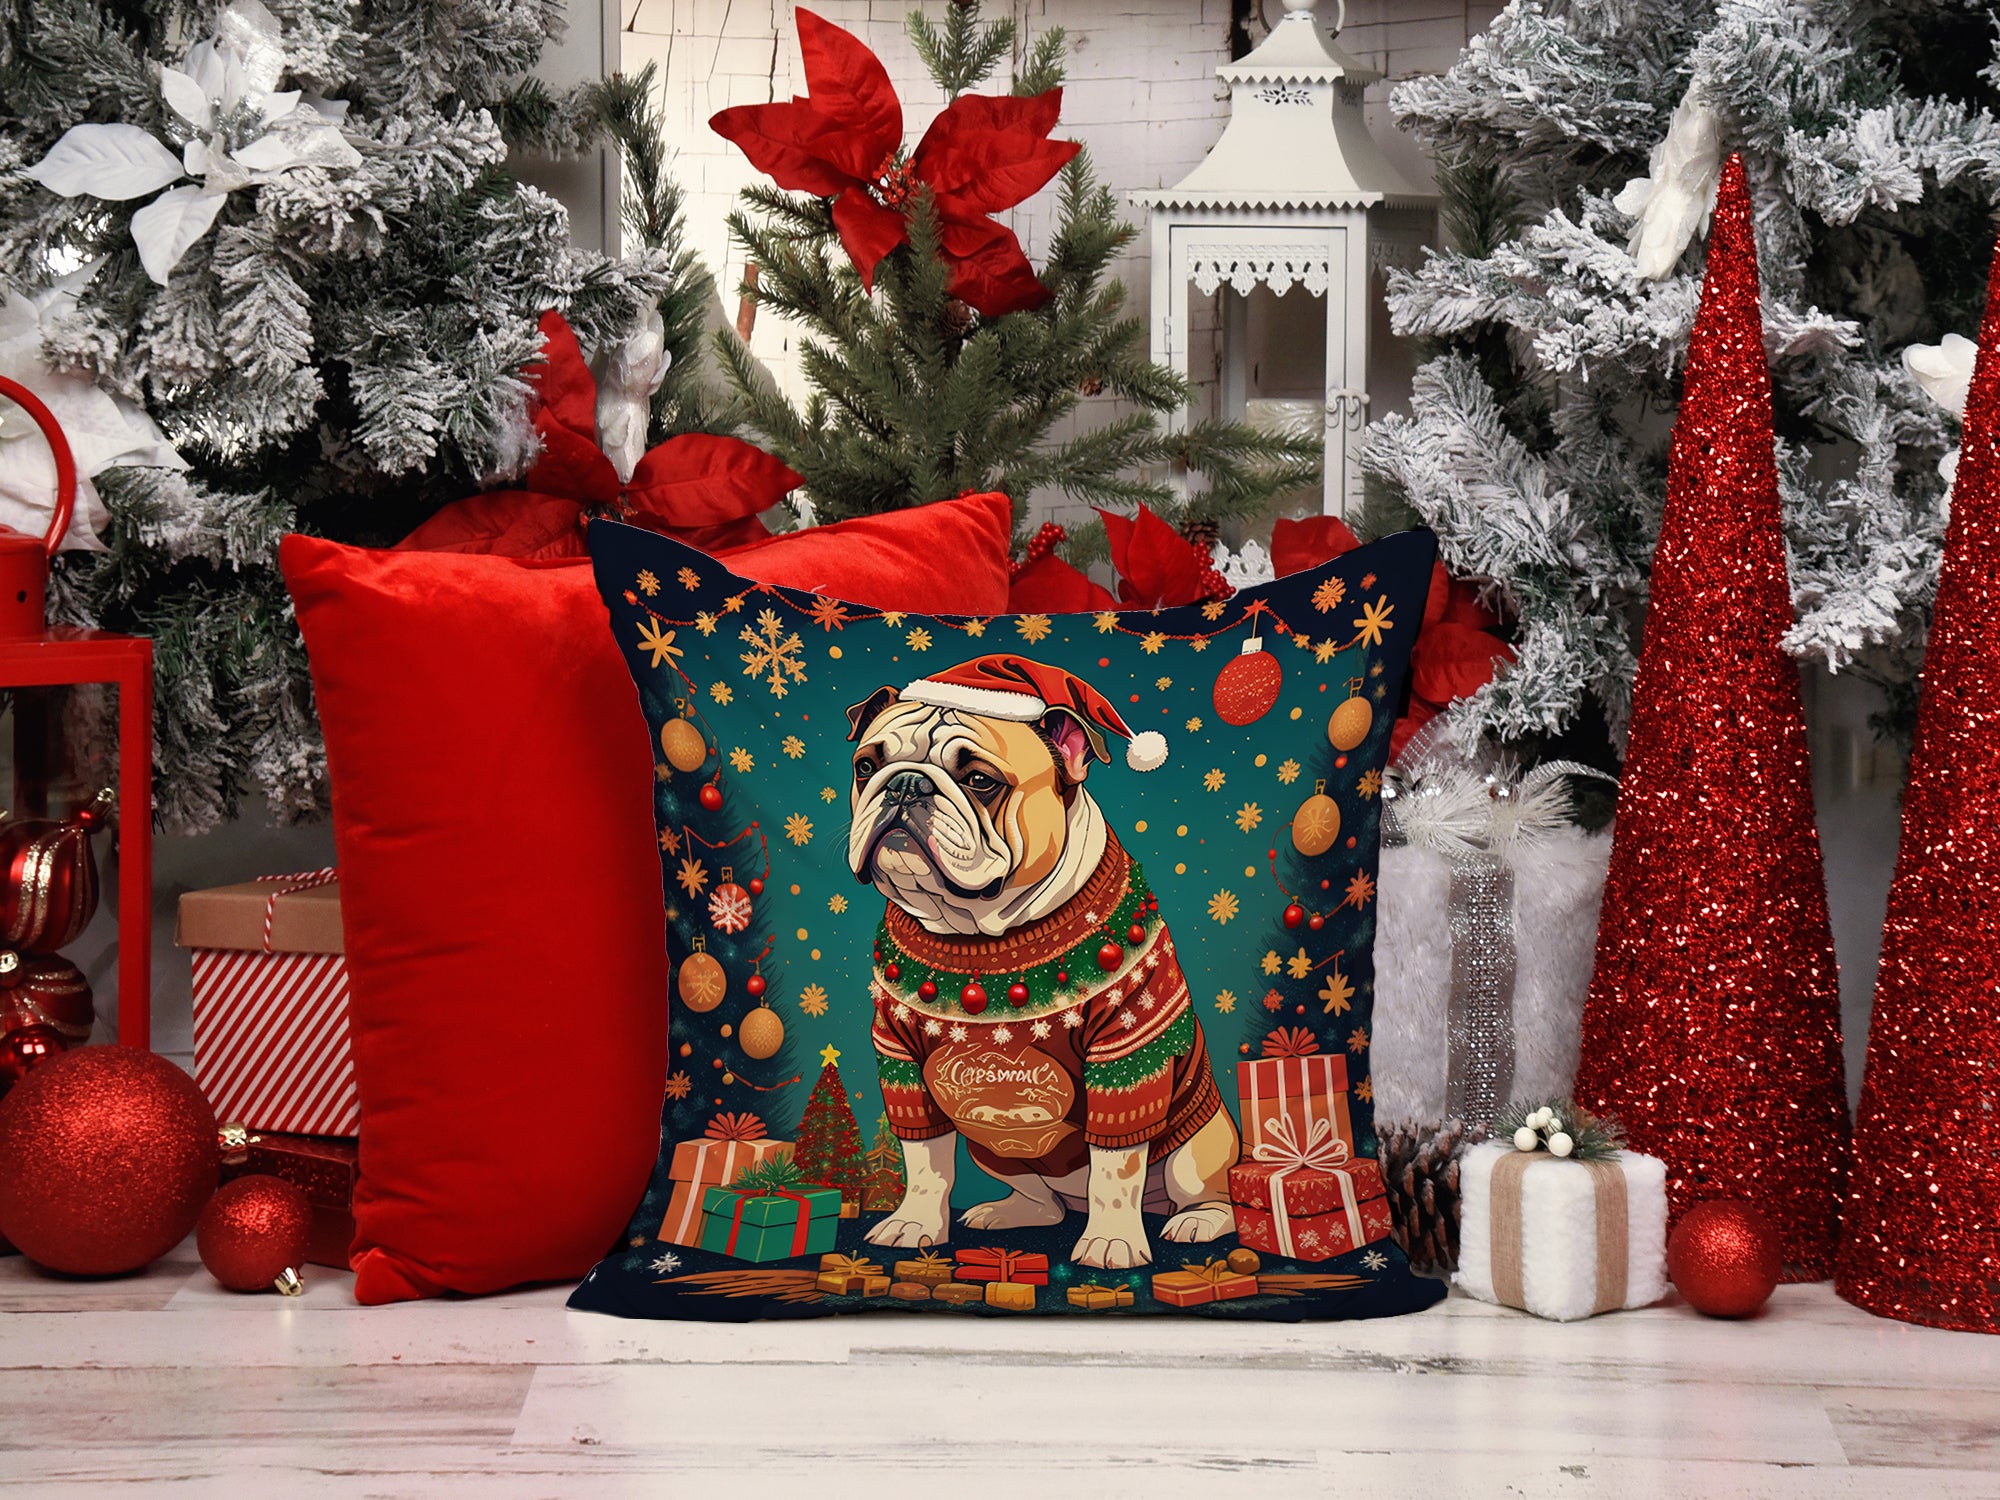 English Bulldog Christmas Fabric Decorative Pillow  the-store.com.